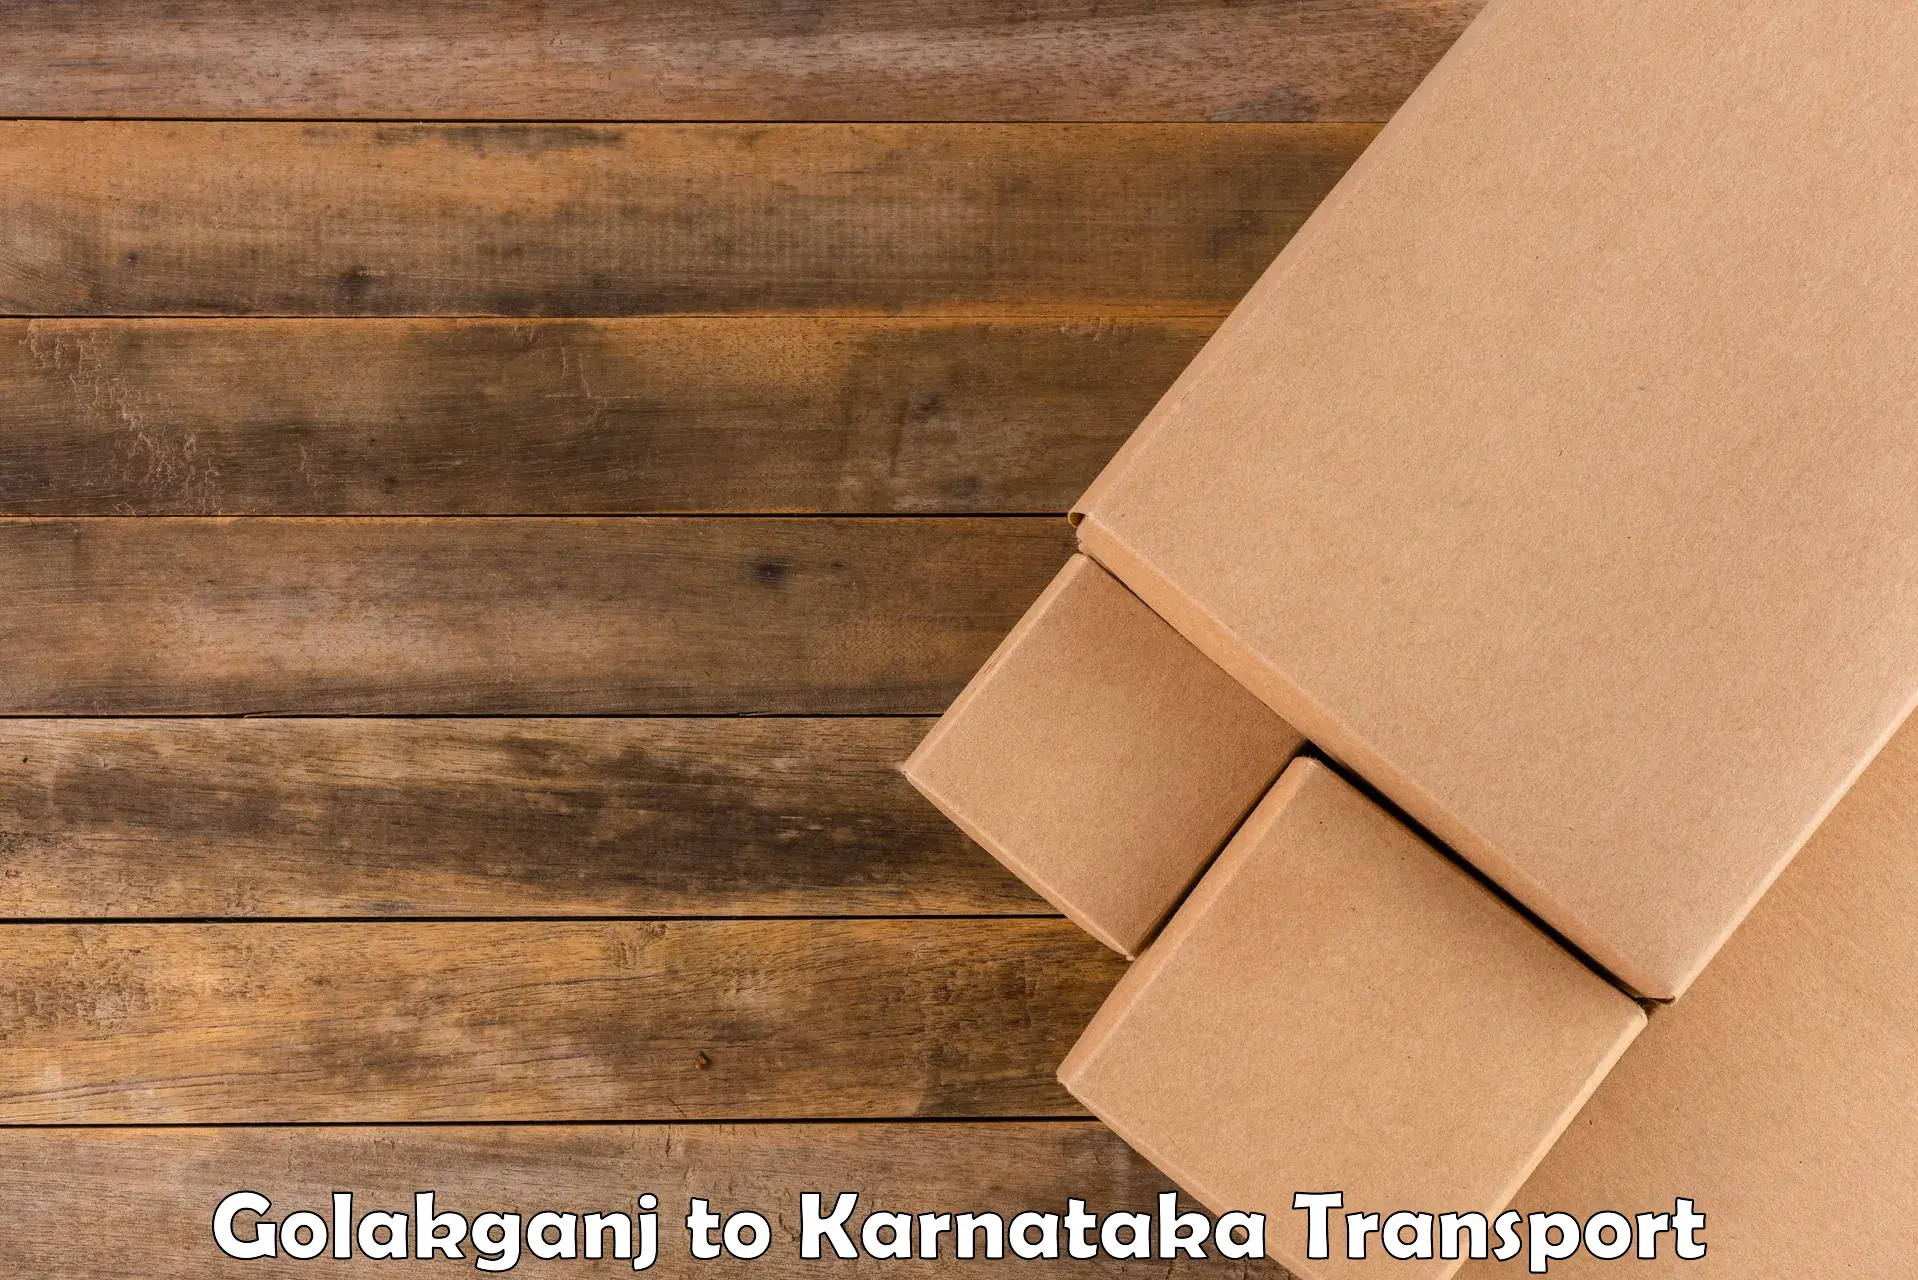 Container transport service Golakganj to Karnataka